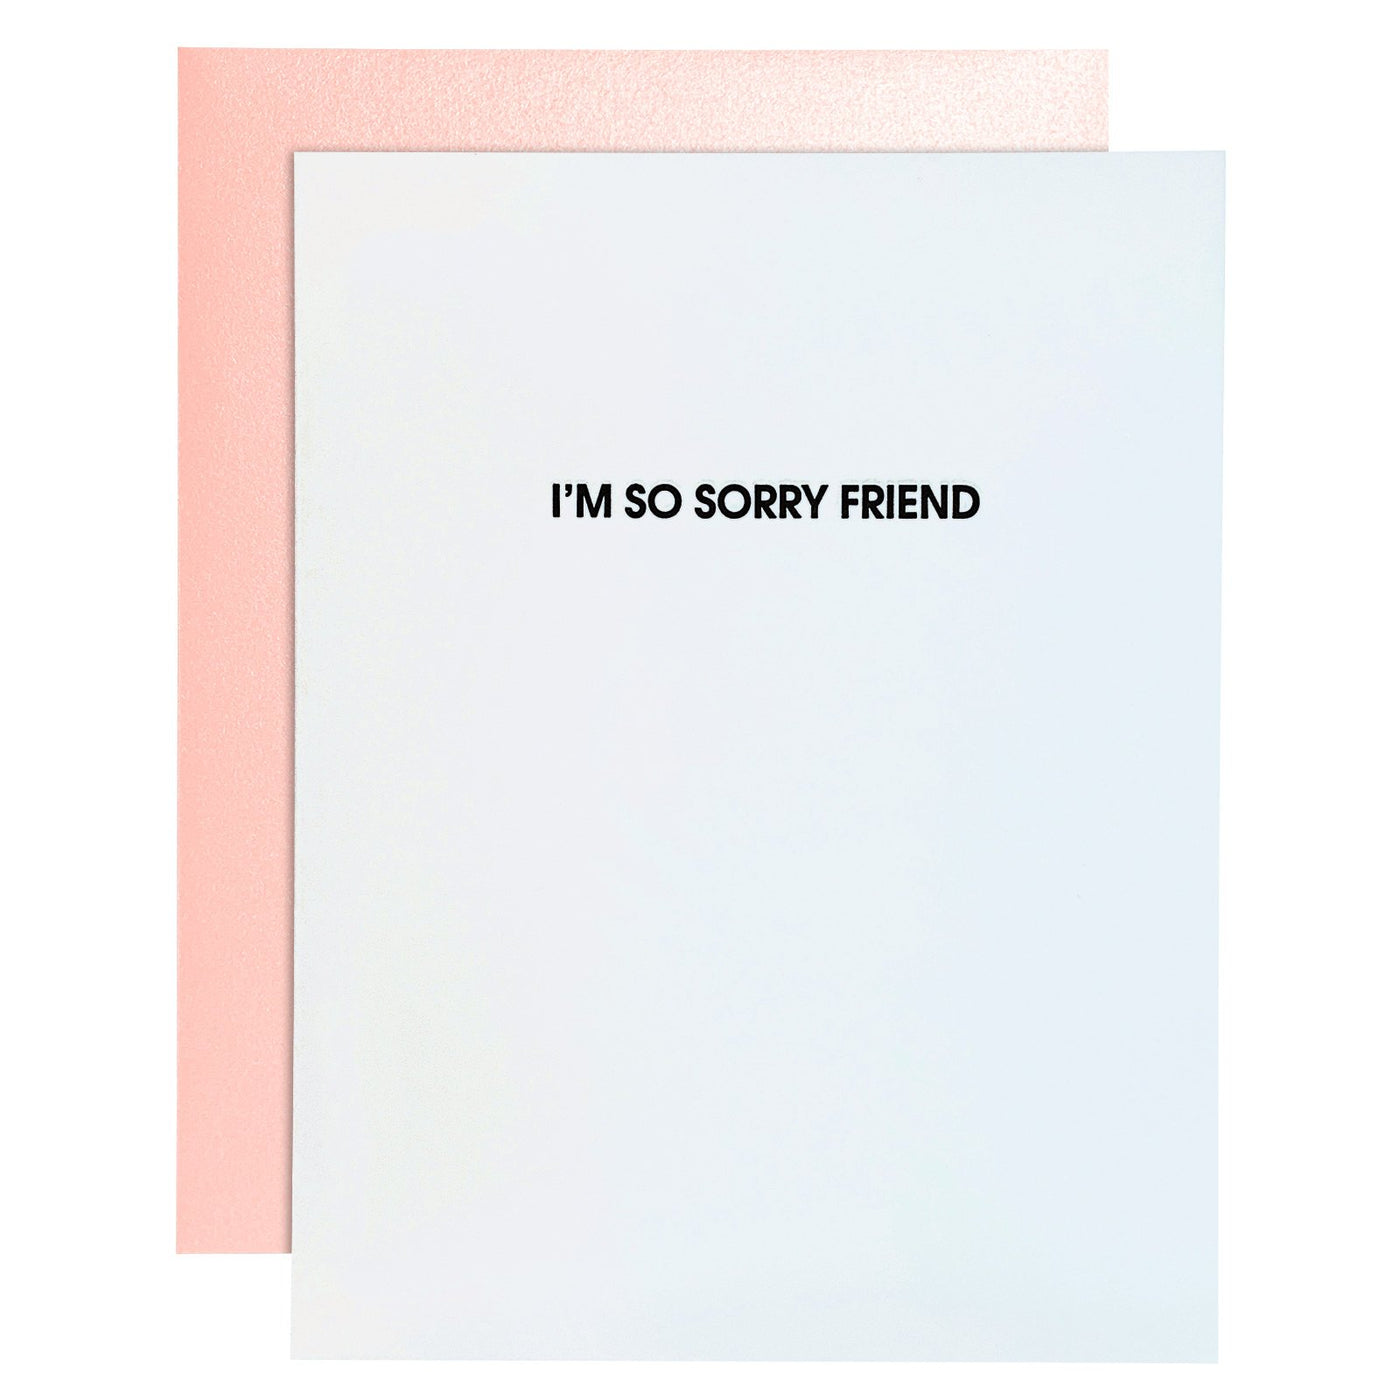 GREETING CARD "I'M SO SORRY FRIEND"